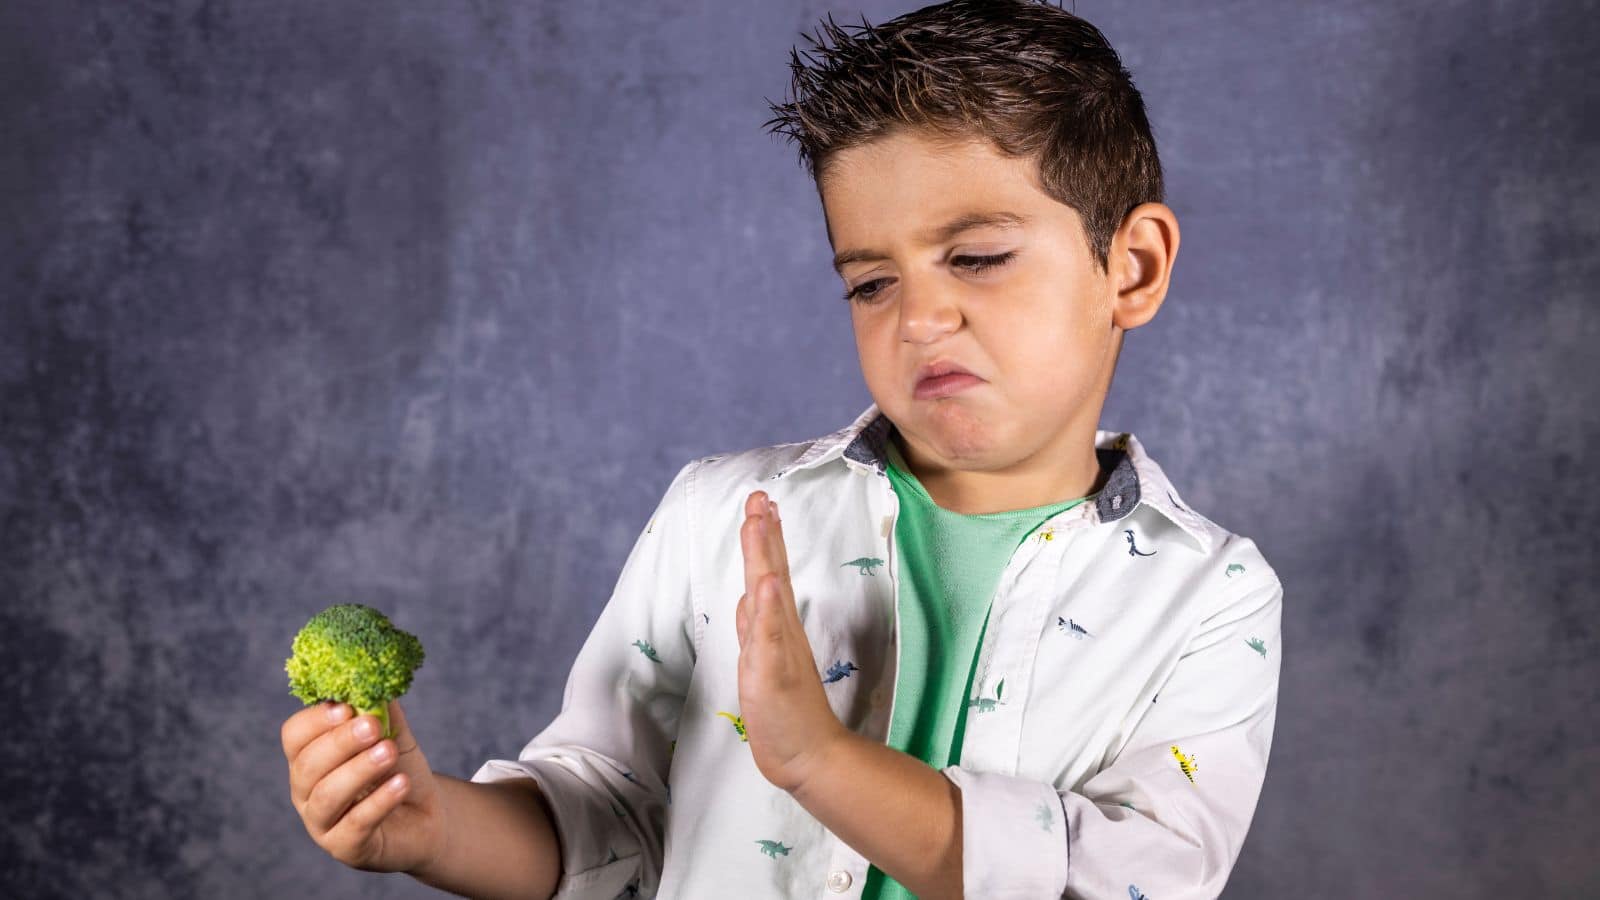 Young boy refusing a stalk of broccoli